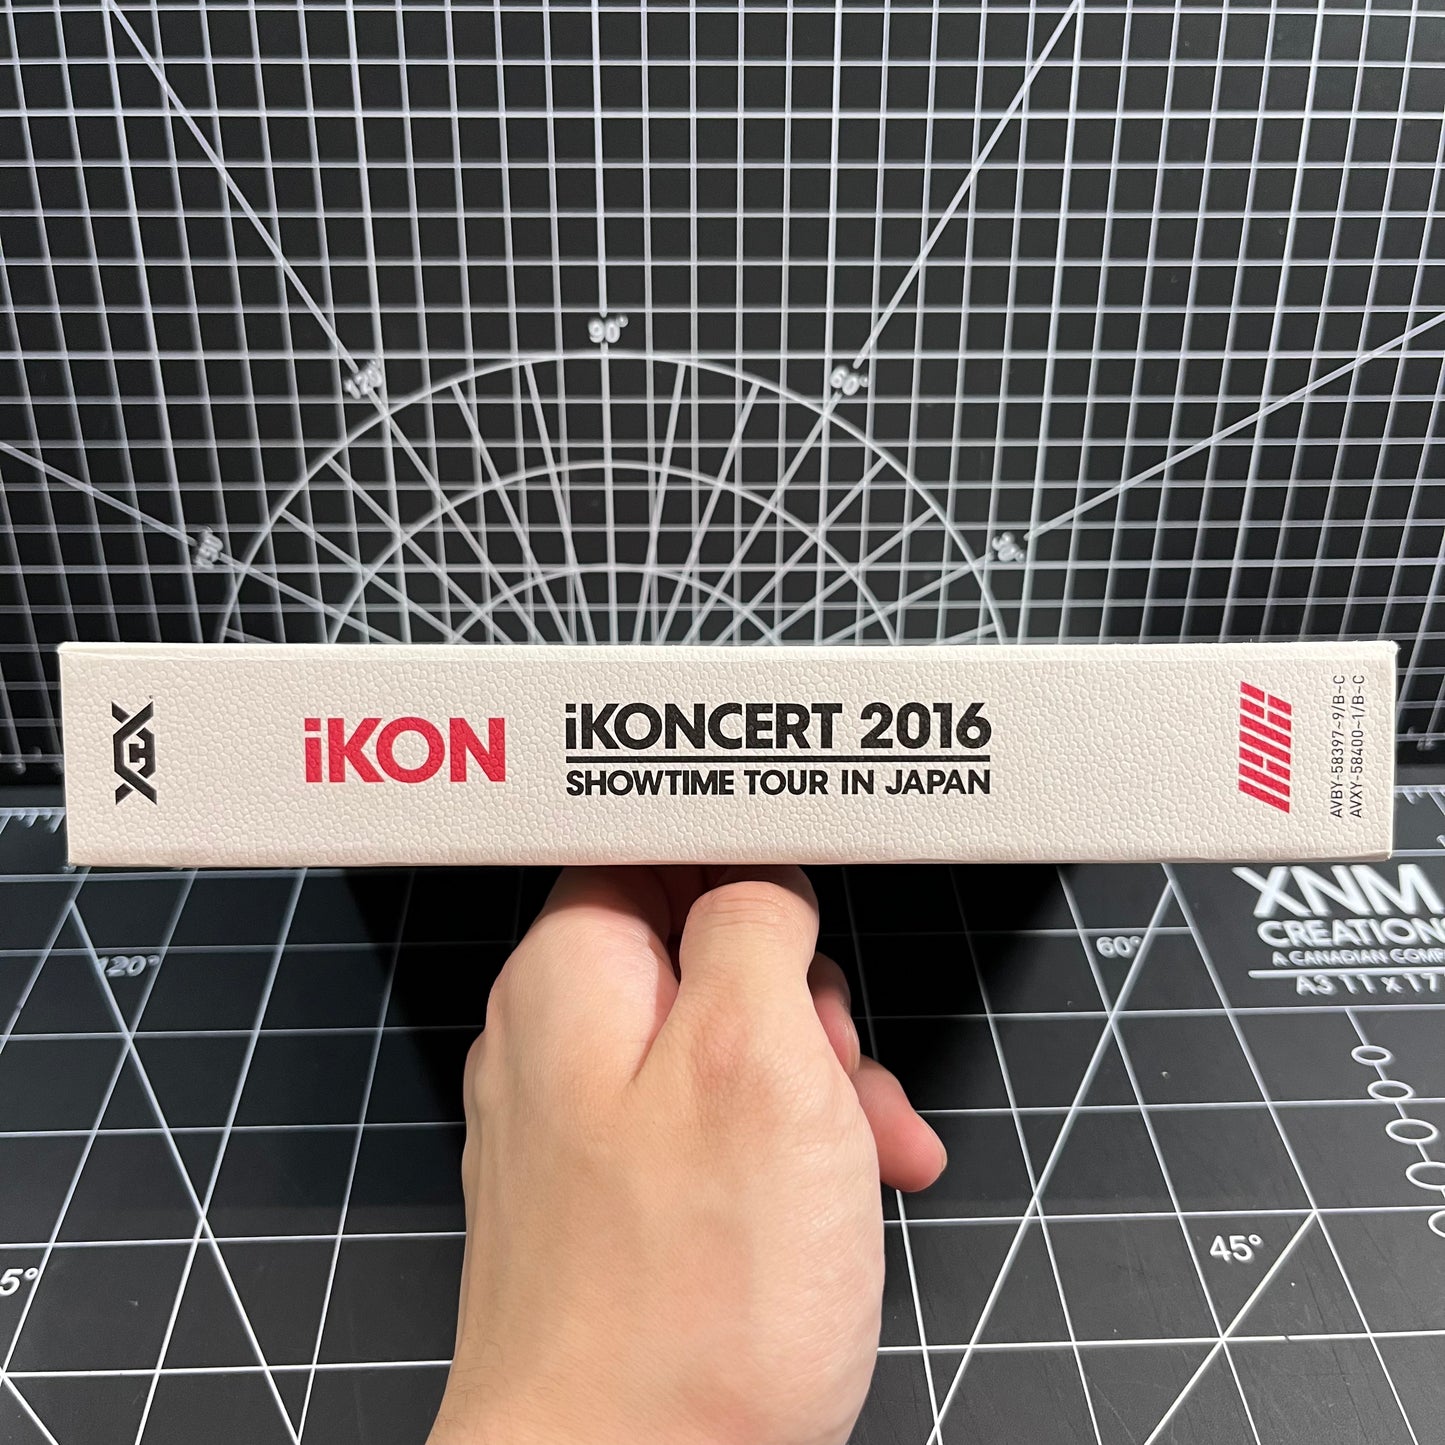 iKON iKONCERT 2016 Showtime Tour in Japan